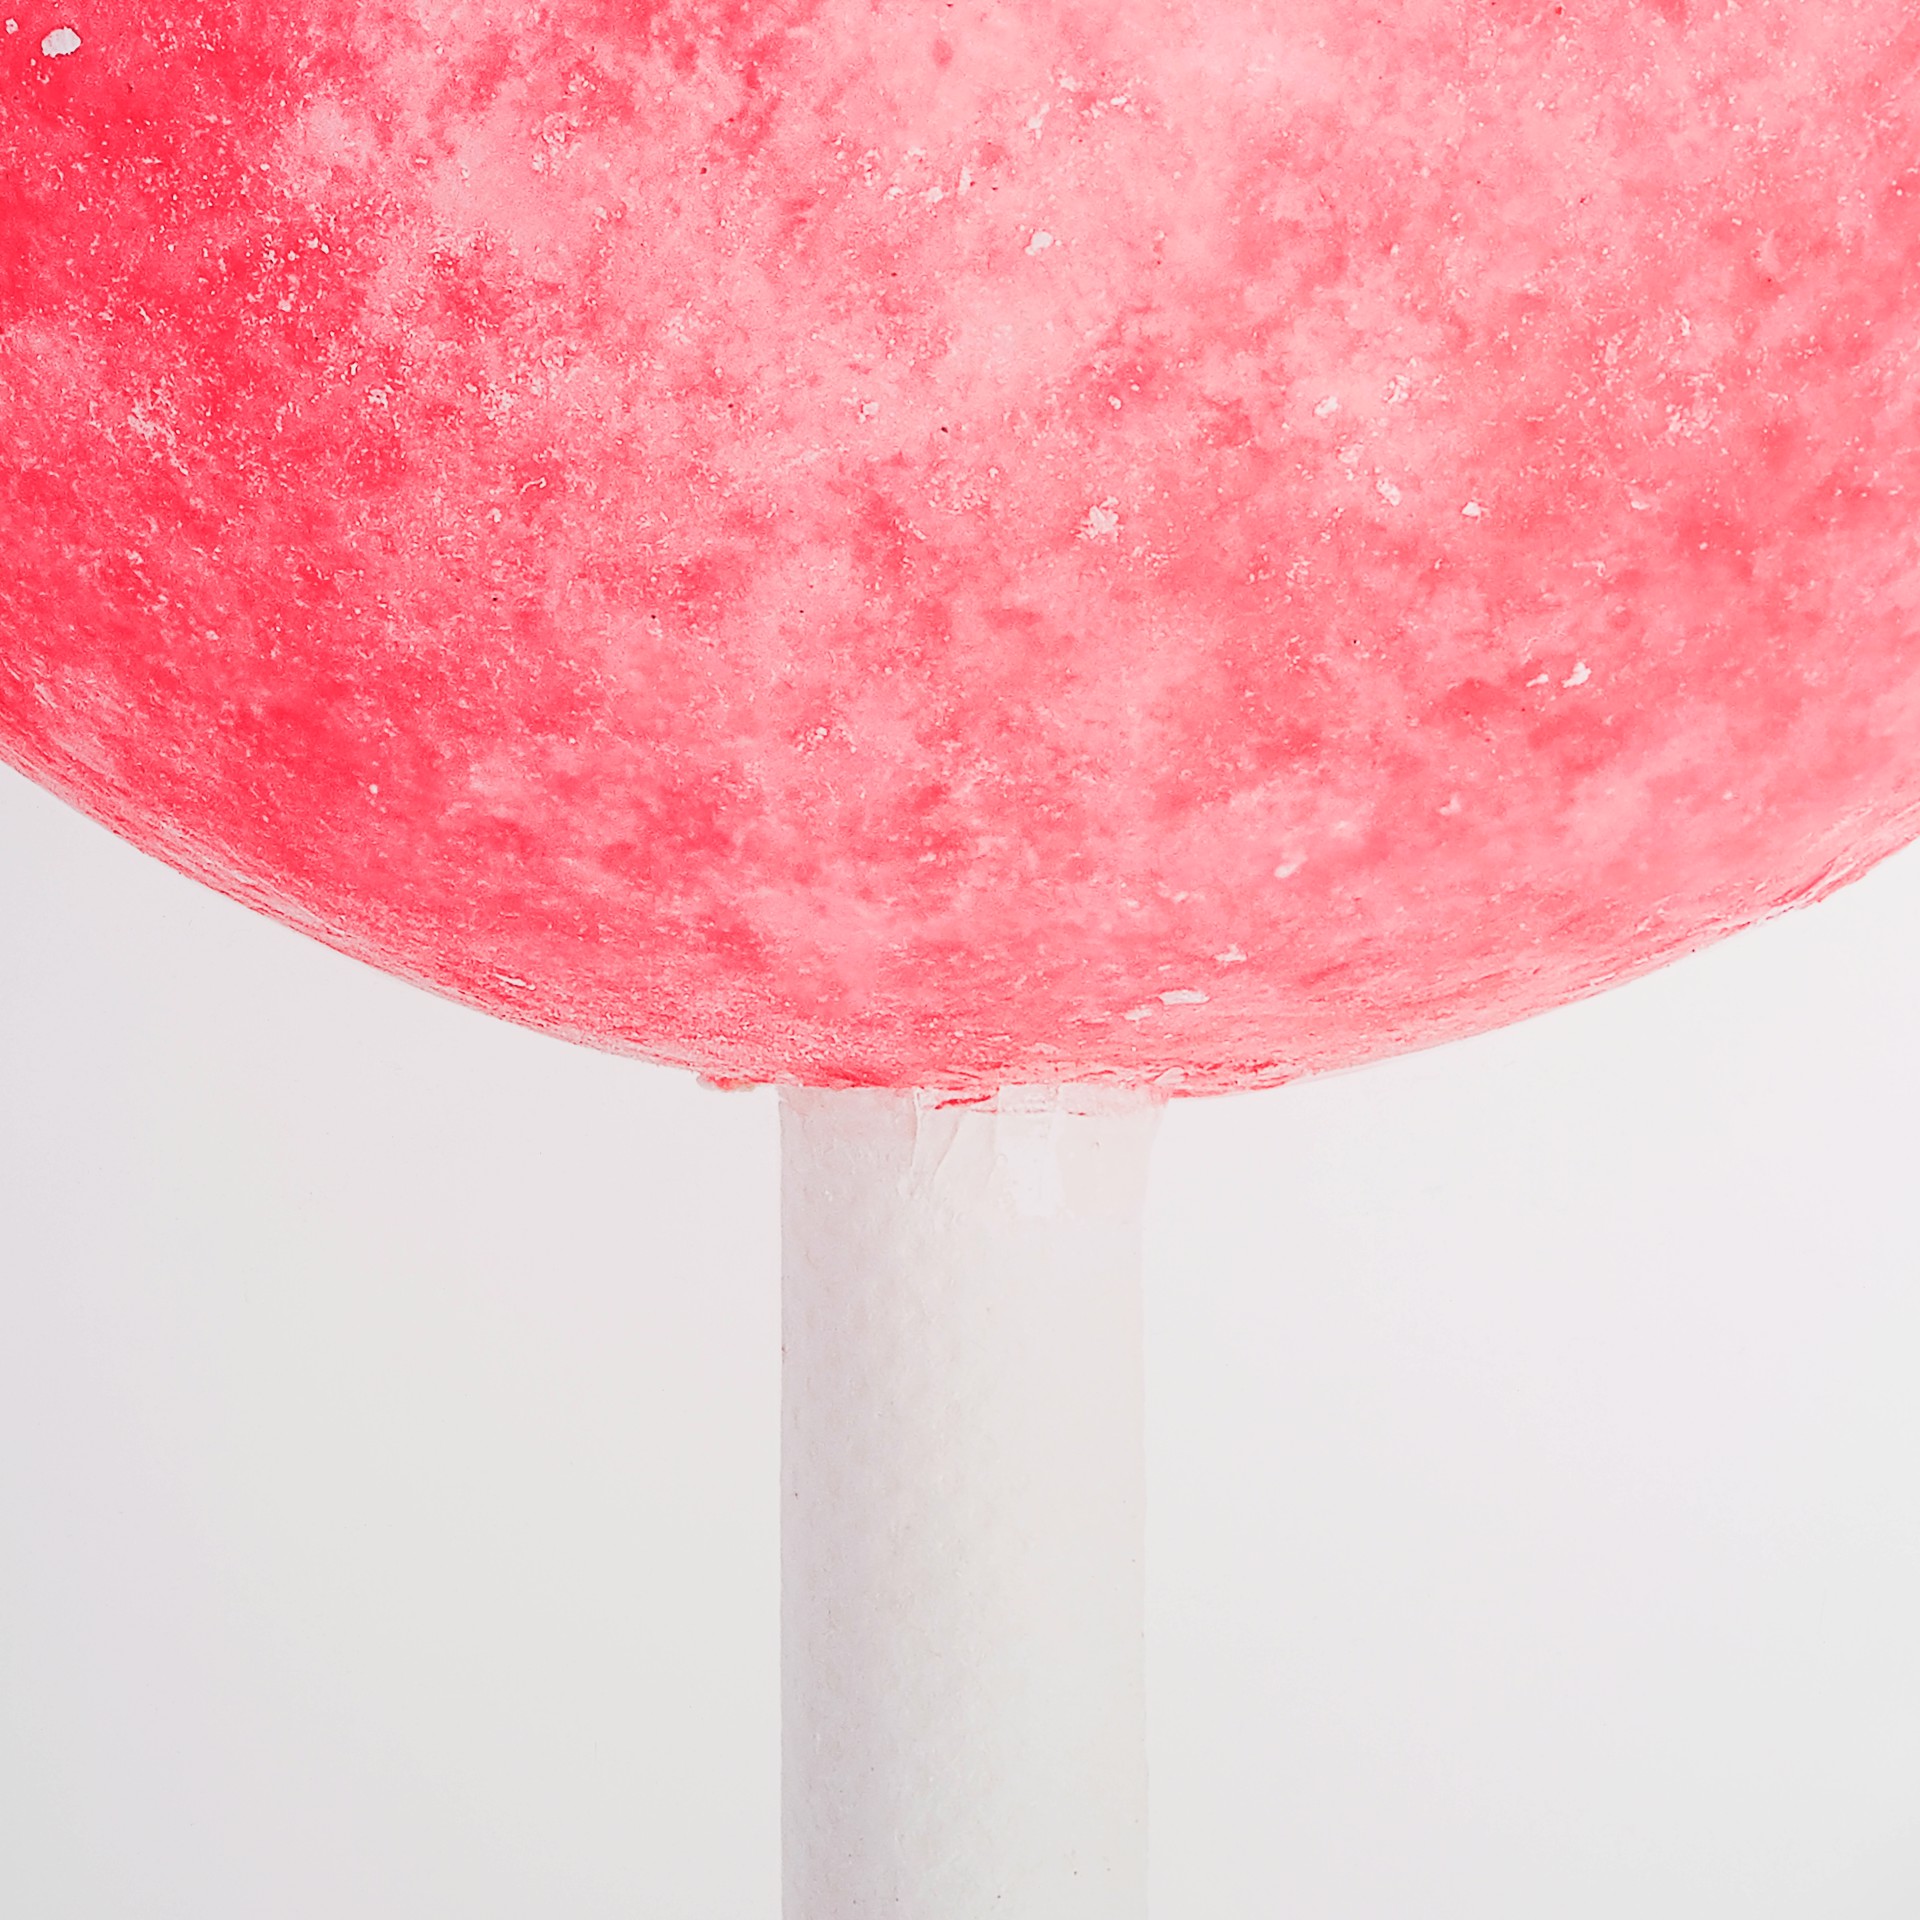 Pink Lollipop by Peter Andrew Lusztyk / Refined Sugar